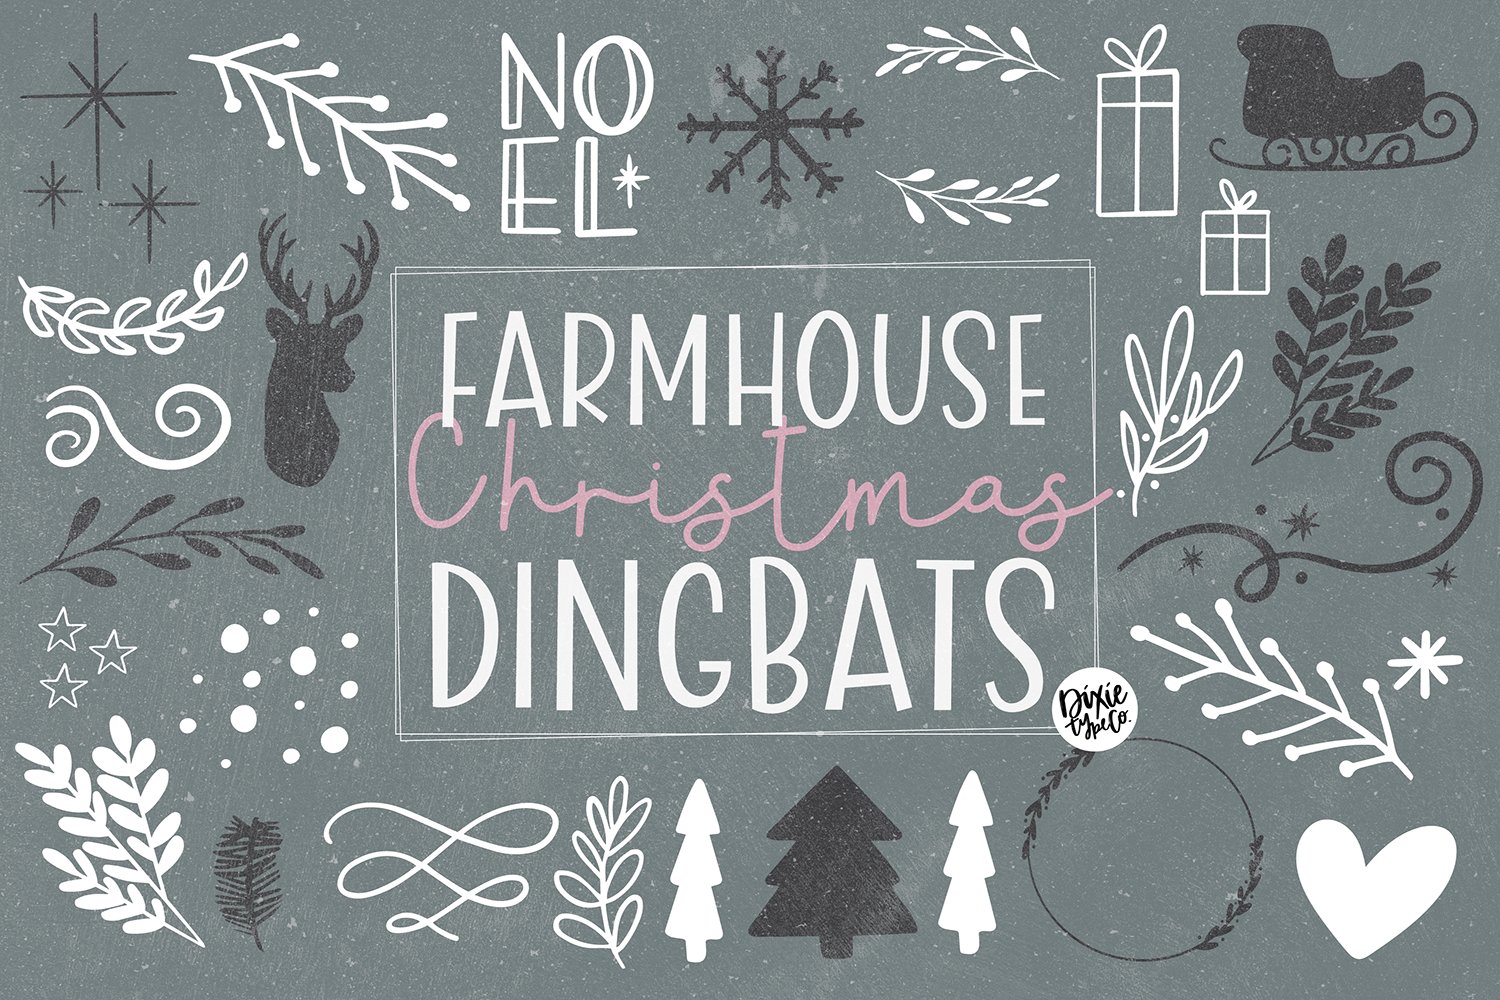 FARMHOUSE CHRISTMAS DINGBATS Font cover image.